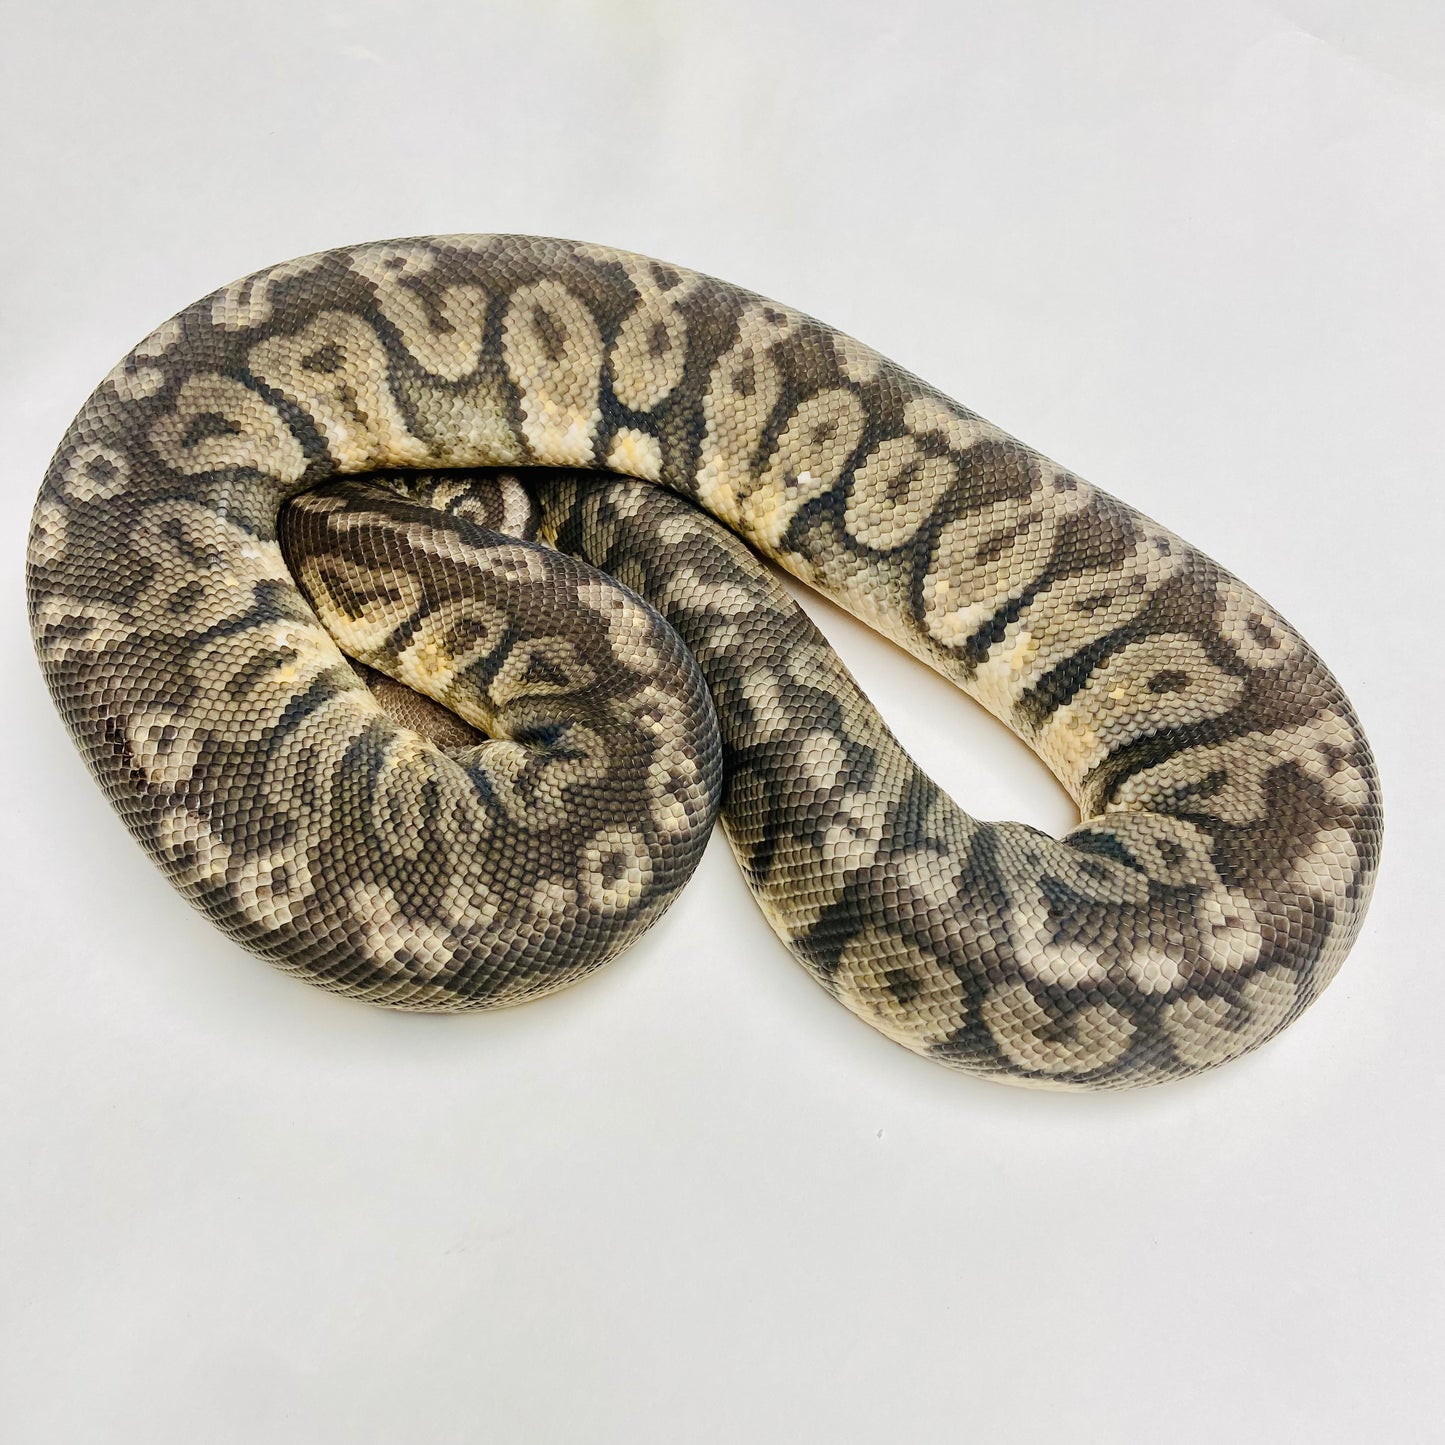 Adult Super Pastel Hidden Gene Woma Ball Python- Male